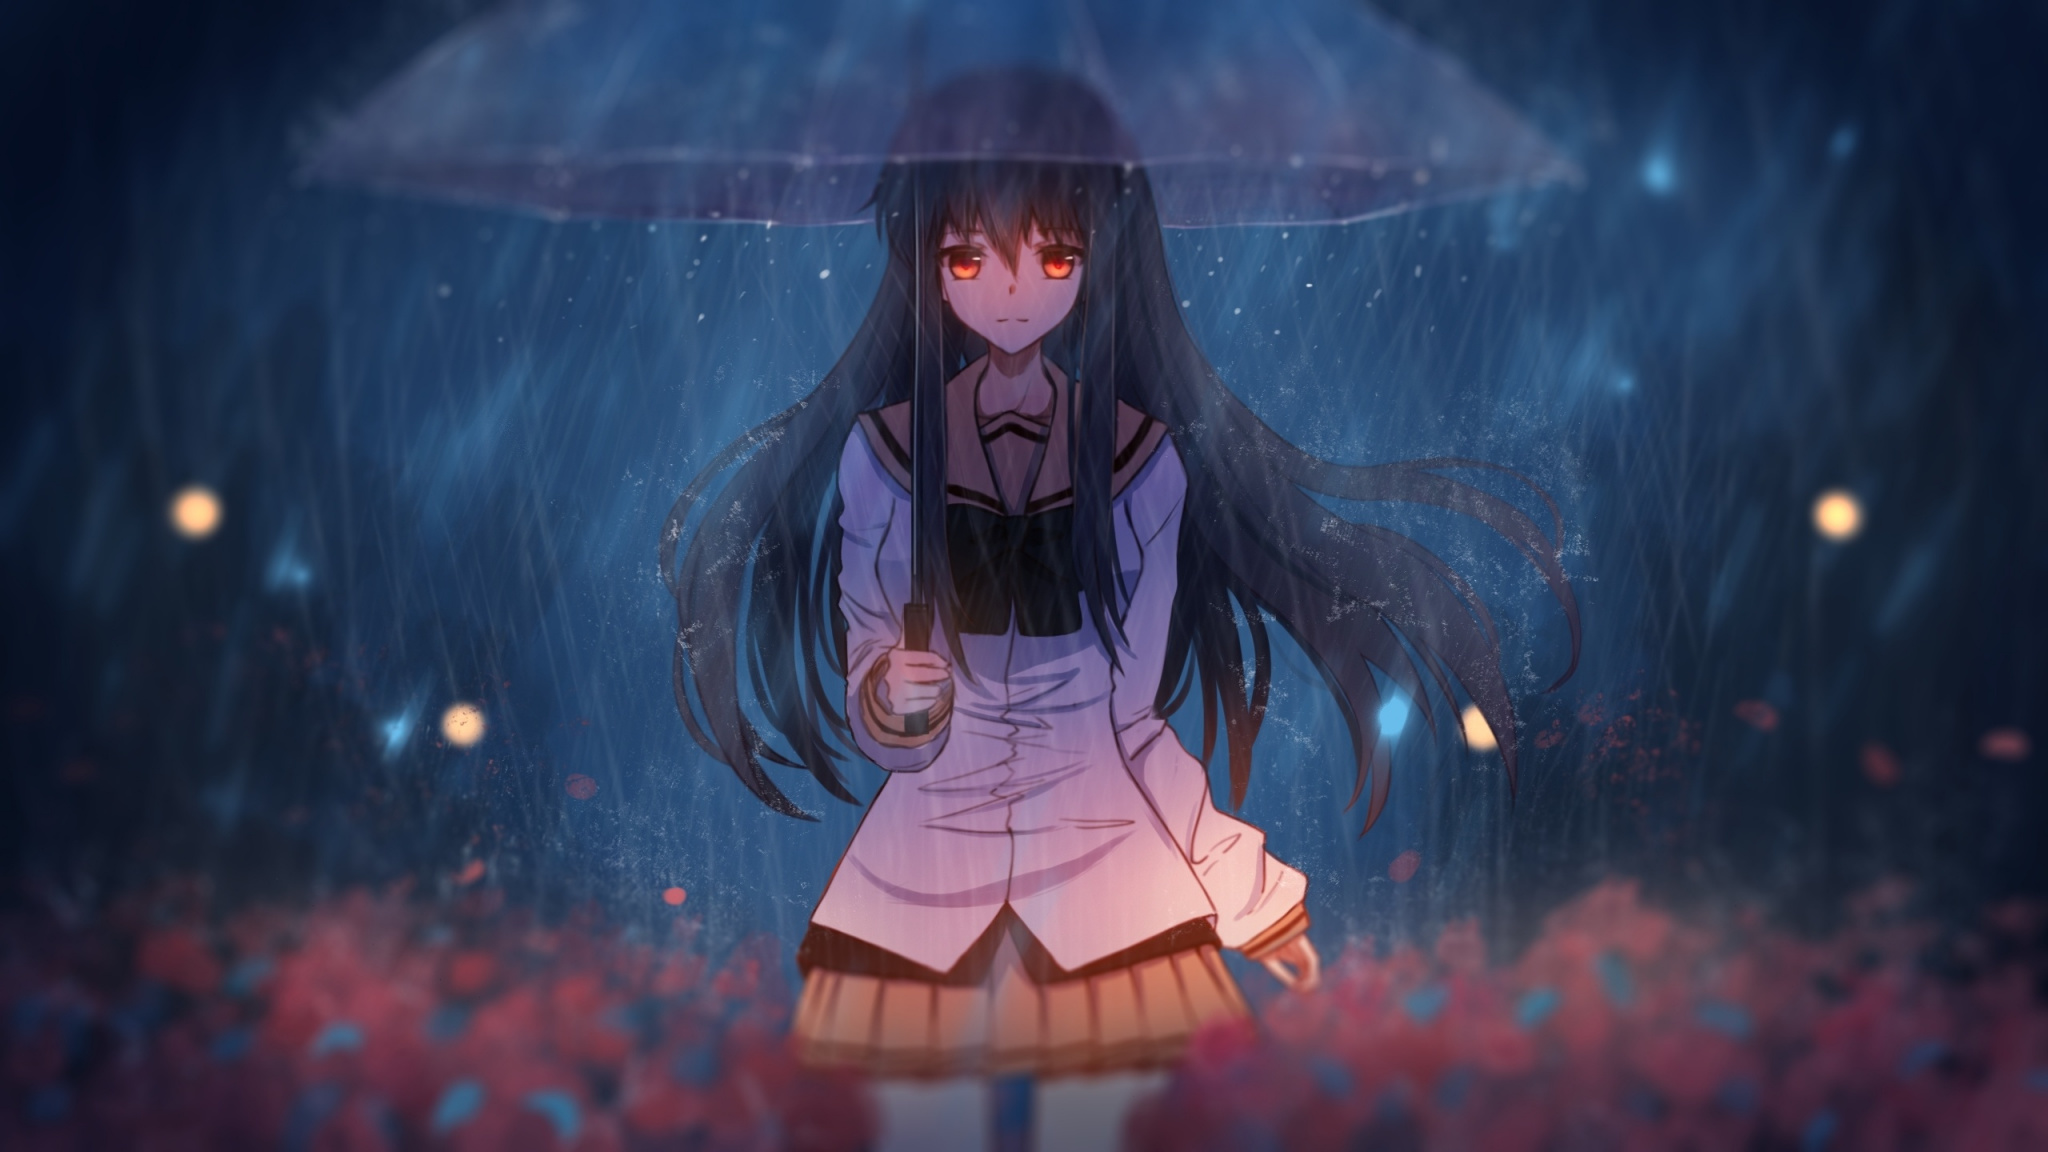 Anime Girl In Rain, With Umbrella, Art, Wallpaper - Anime Girl In Rain With Umbrella - HD Wallpaper 